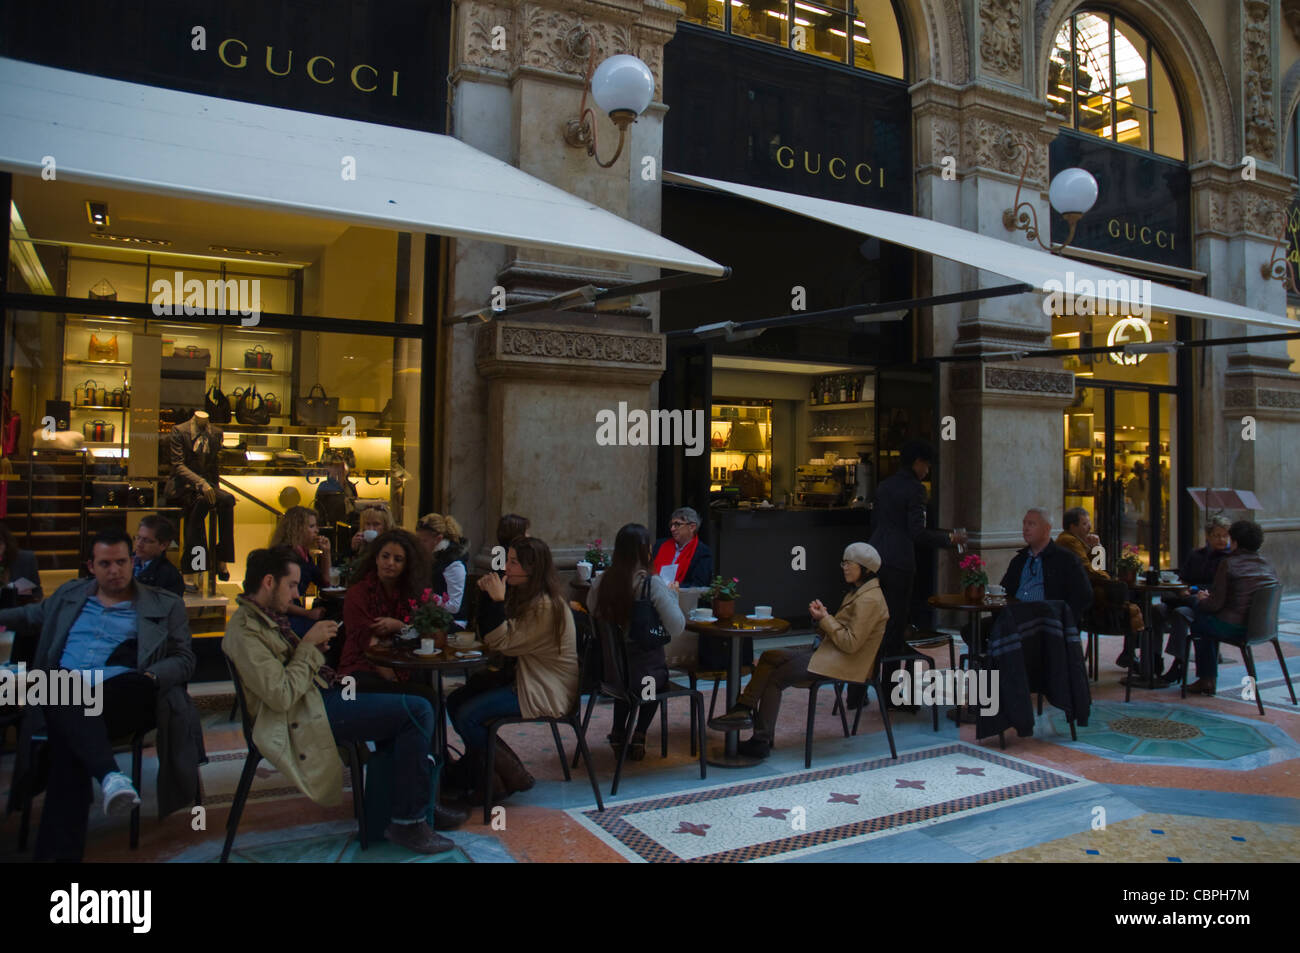 Cafe of Gucchi fashion store Galleria Vittoria Emanuele II shopping centre  at Piazza del Duomo square central Milan Italy Stock Photo - Alamy